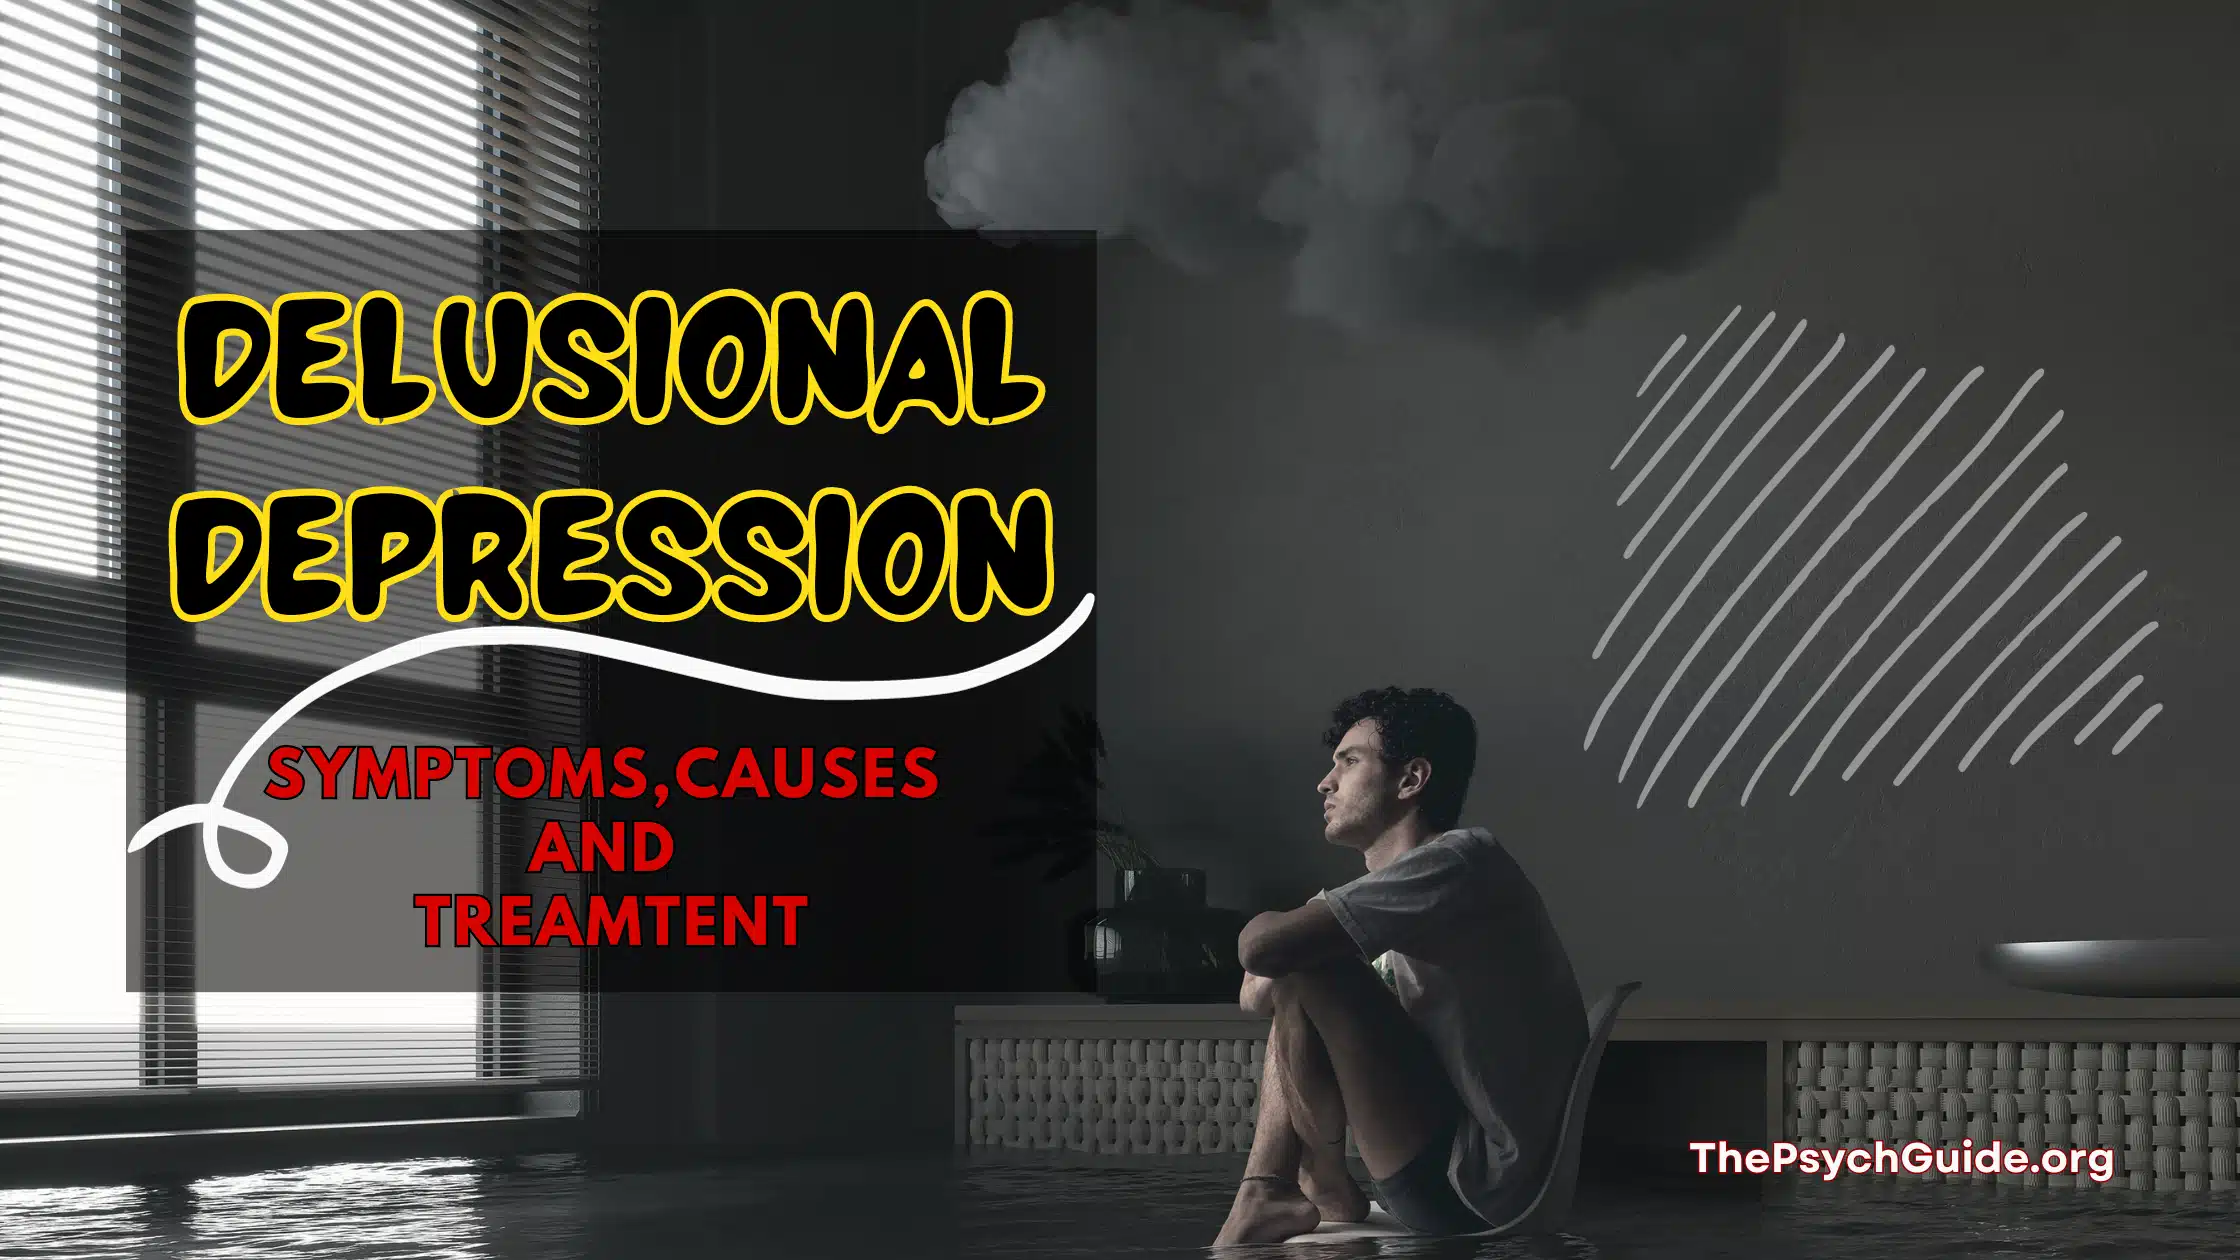 Delusional depression symptoms